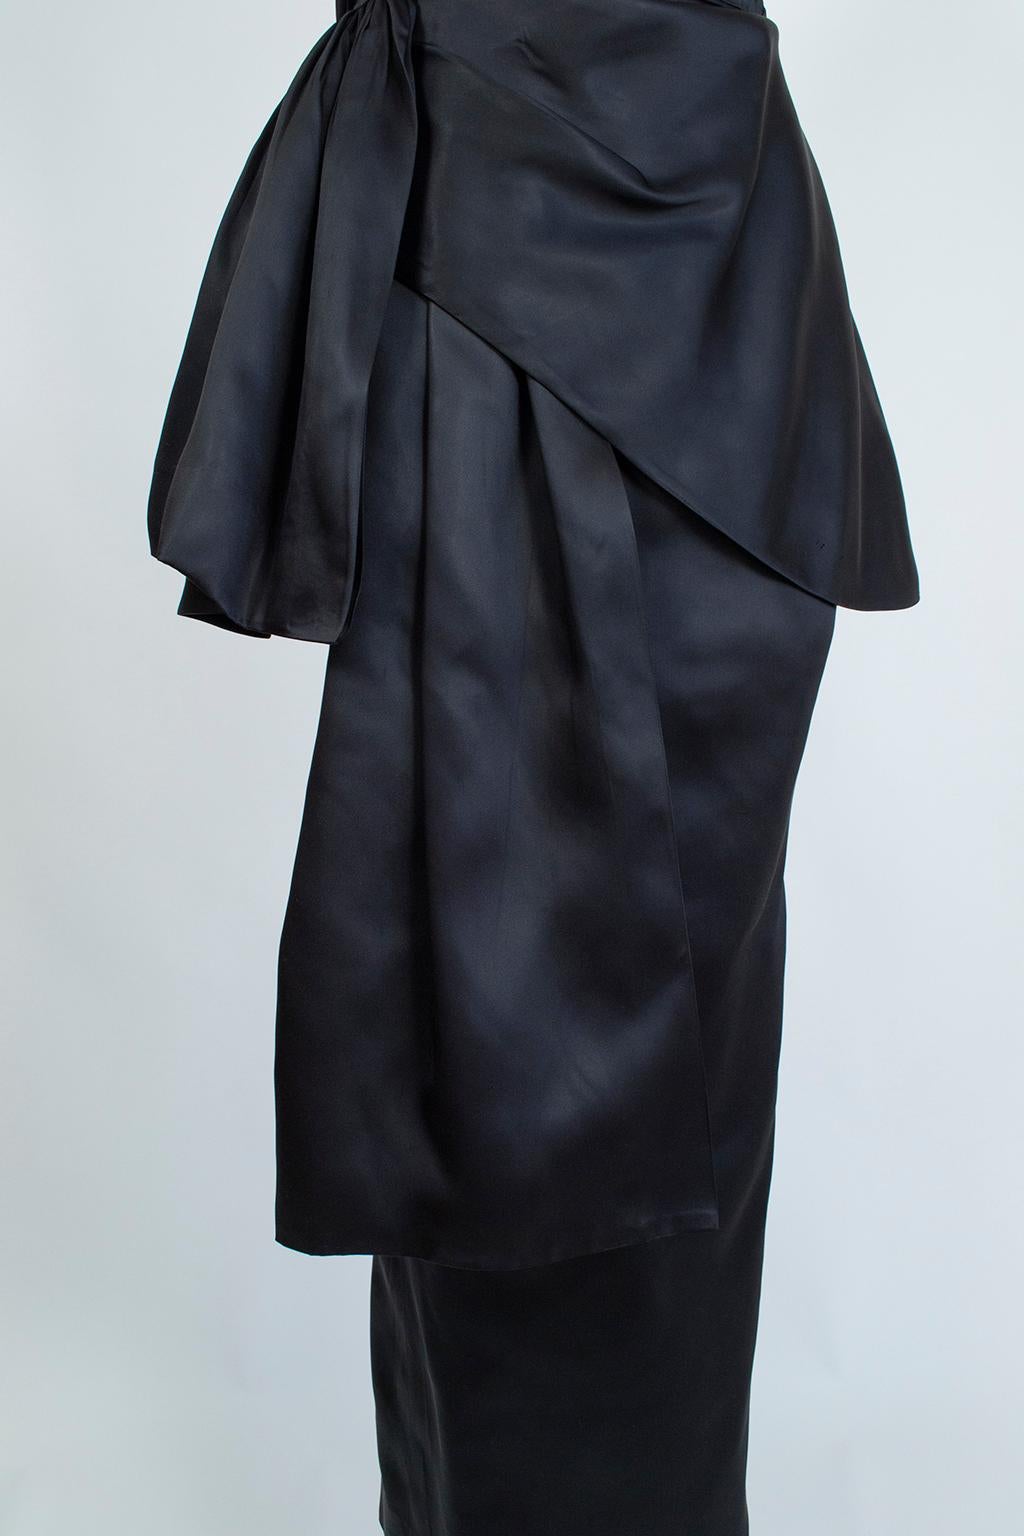 Black Satin Asymmetrical Mermaid Peplum Gown with Detachable Hip Sash- XS, 1950s 5